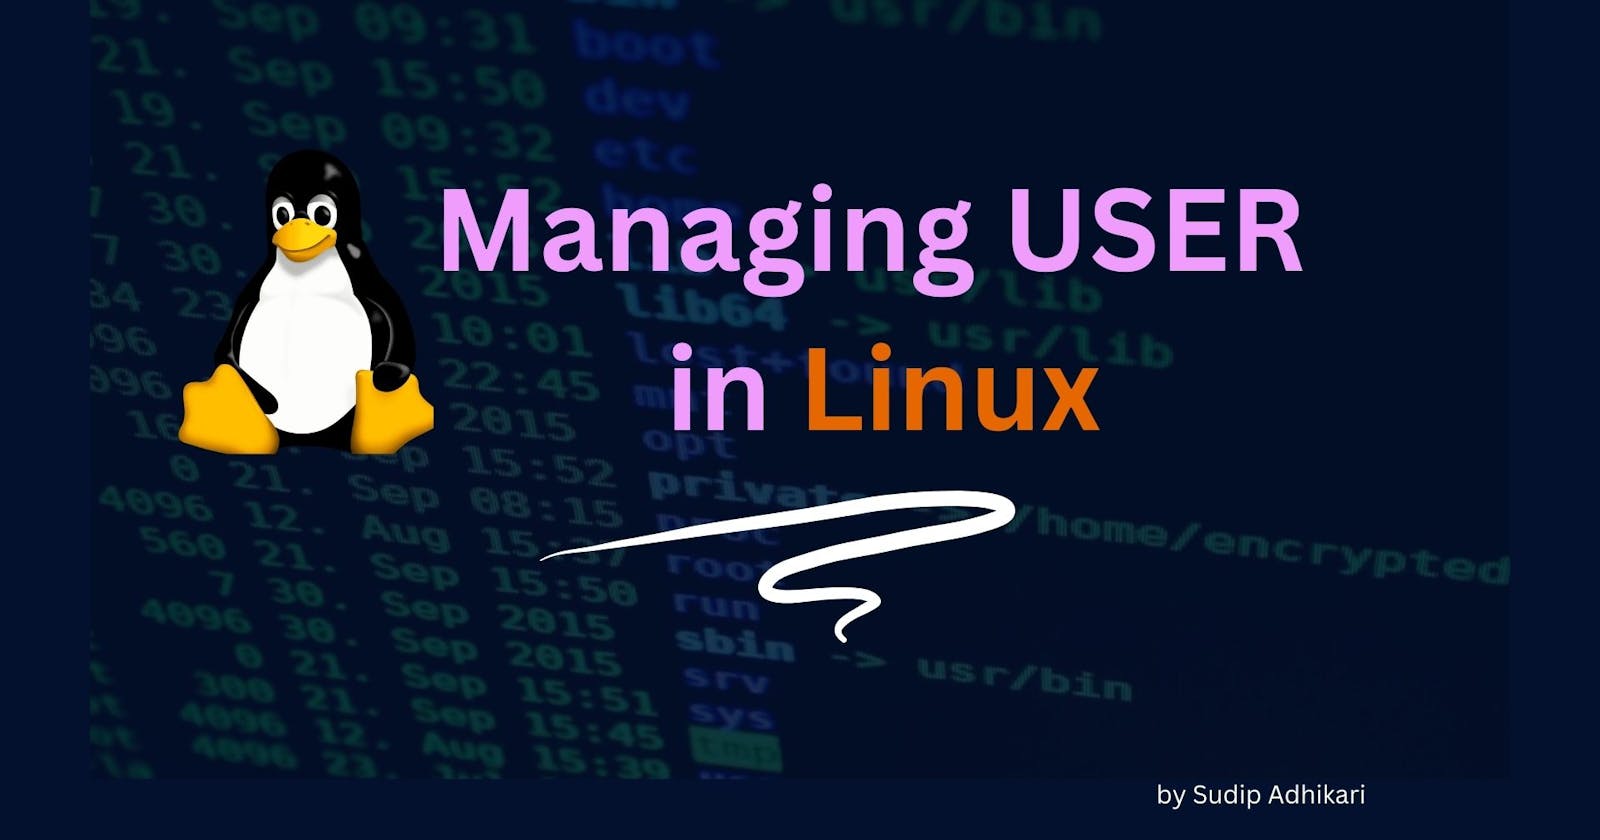 Managing user in Linux